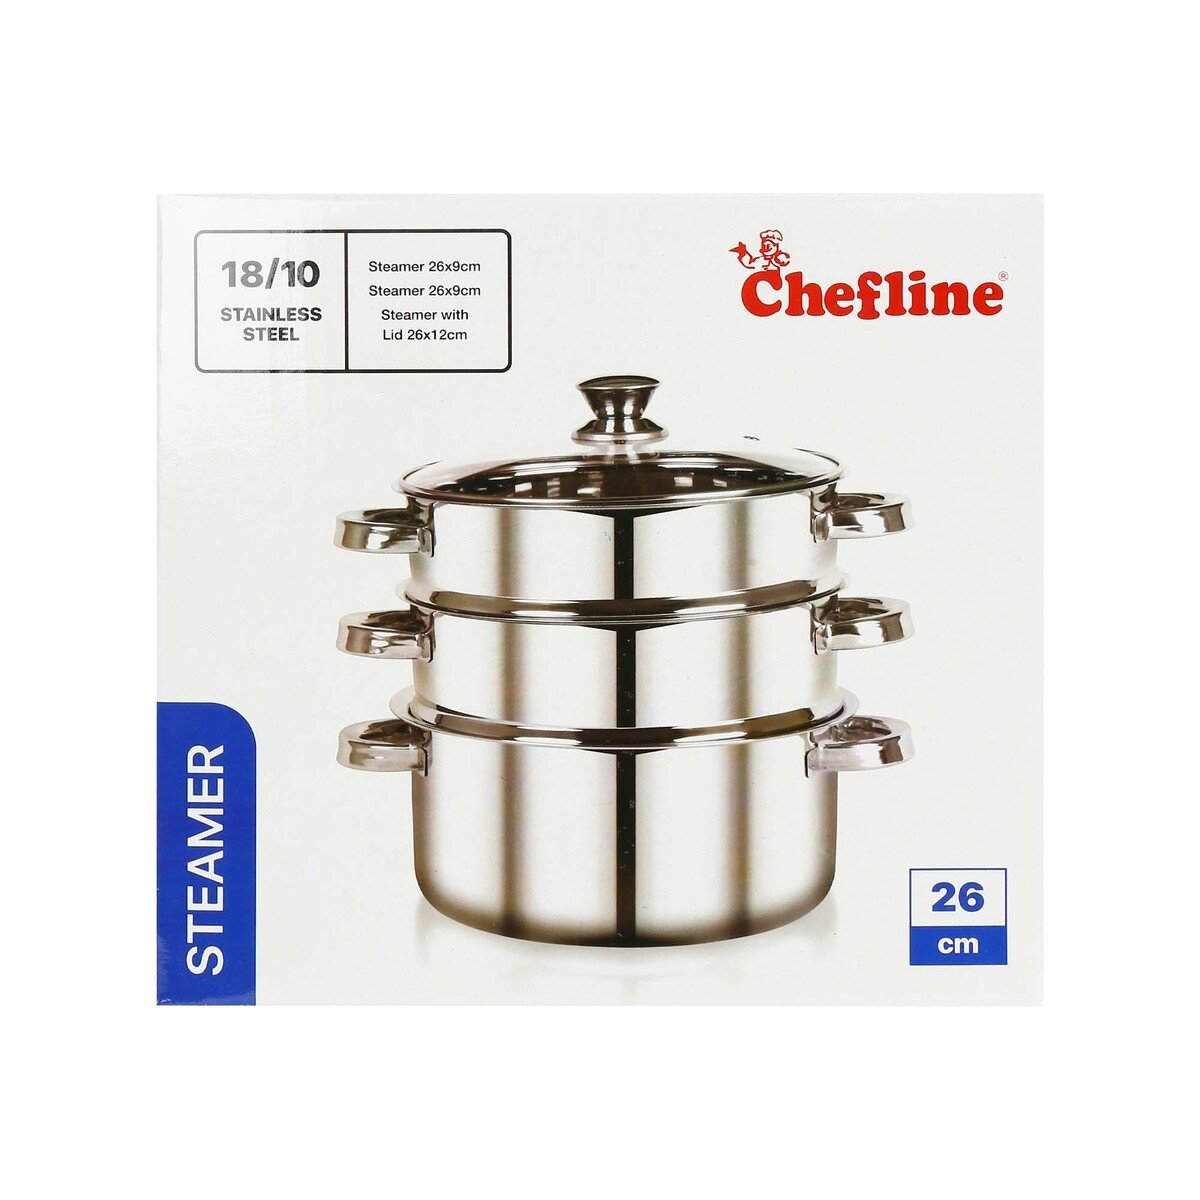 Chefline Stainless Steel Food Steamer 26cm 3Layer SNPIND